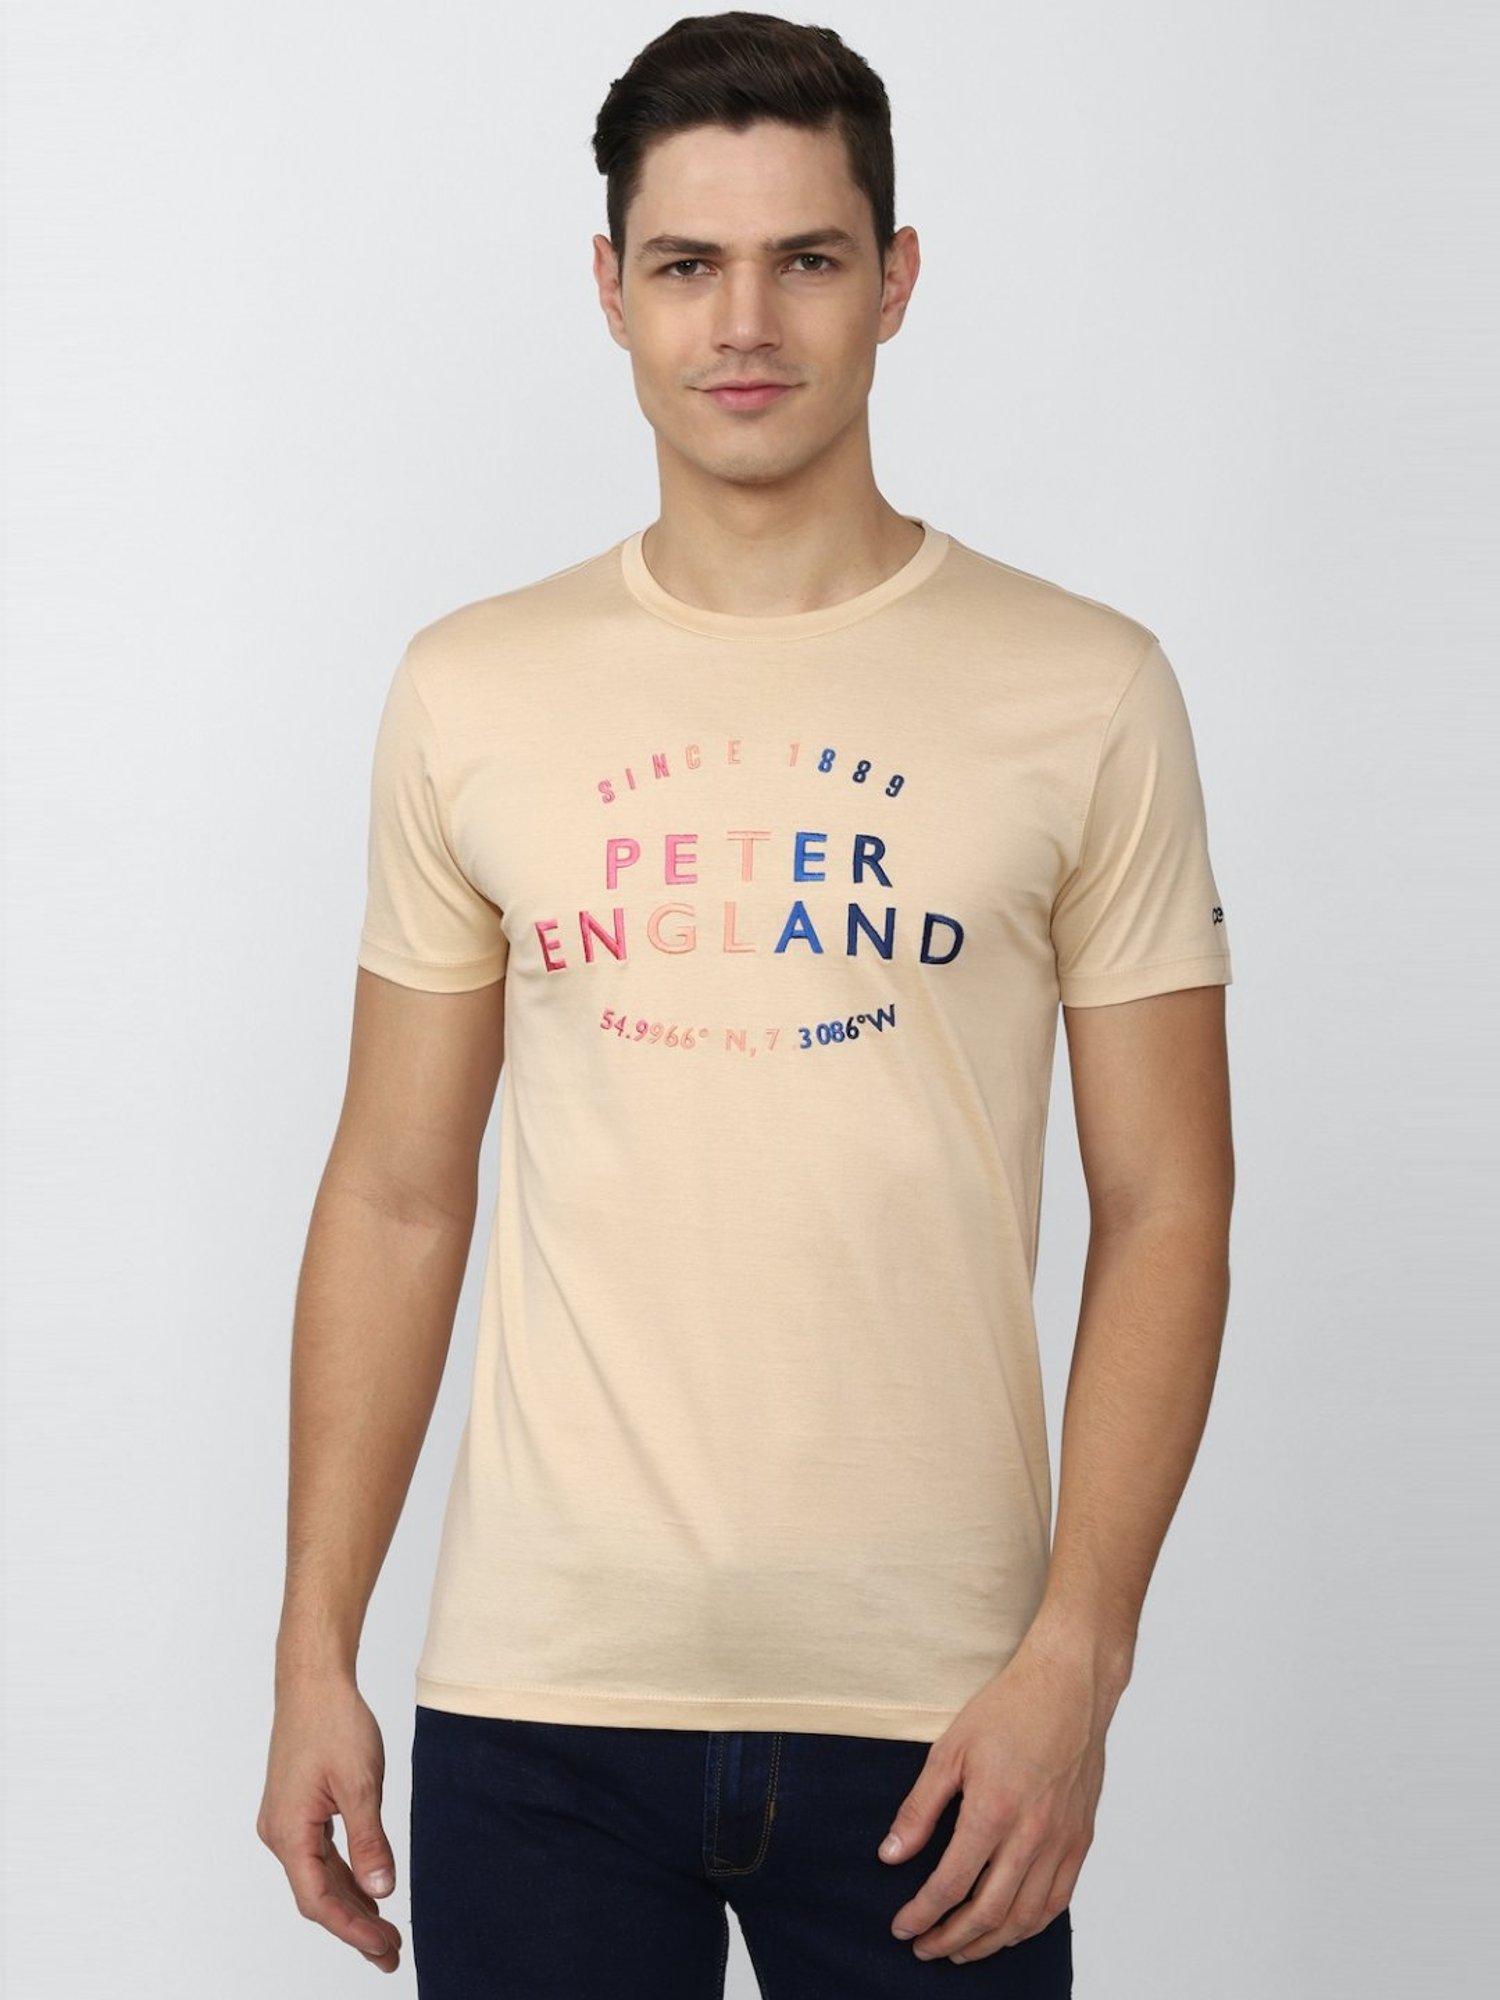 Peter England Jeans Shirts, Peter England Blue Shirt for Men at Peterengland .com